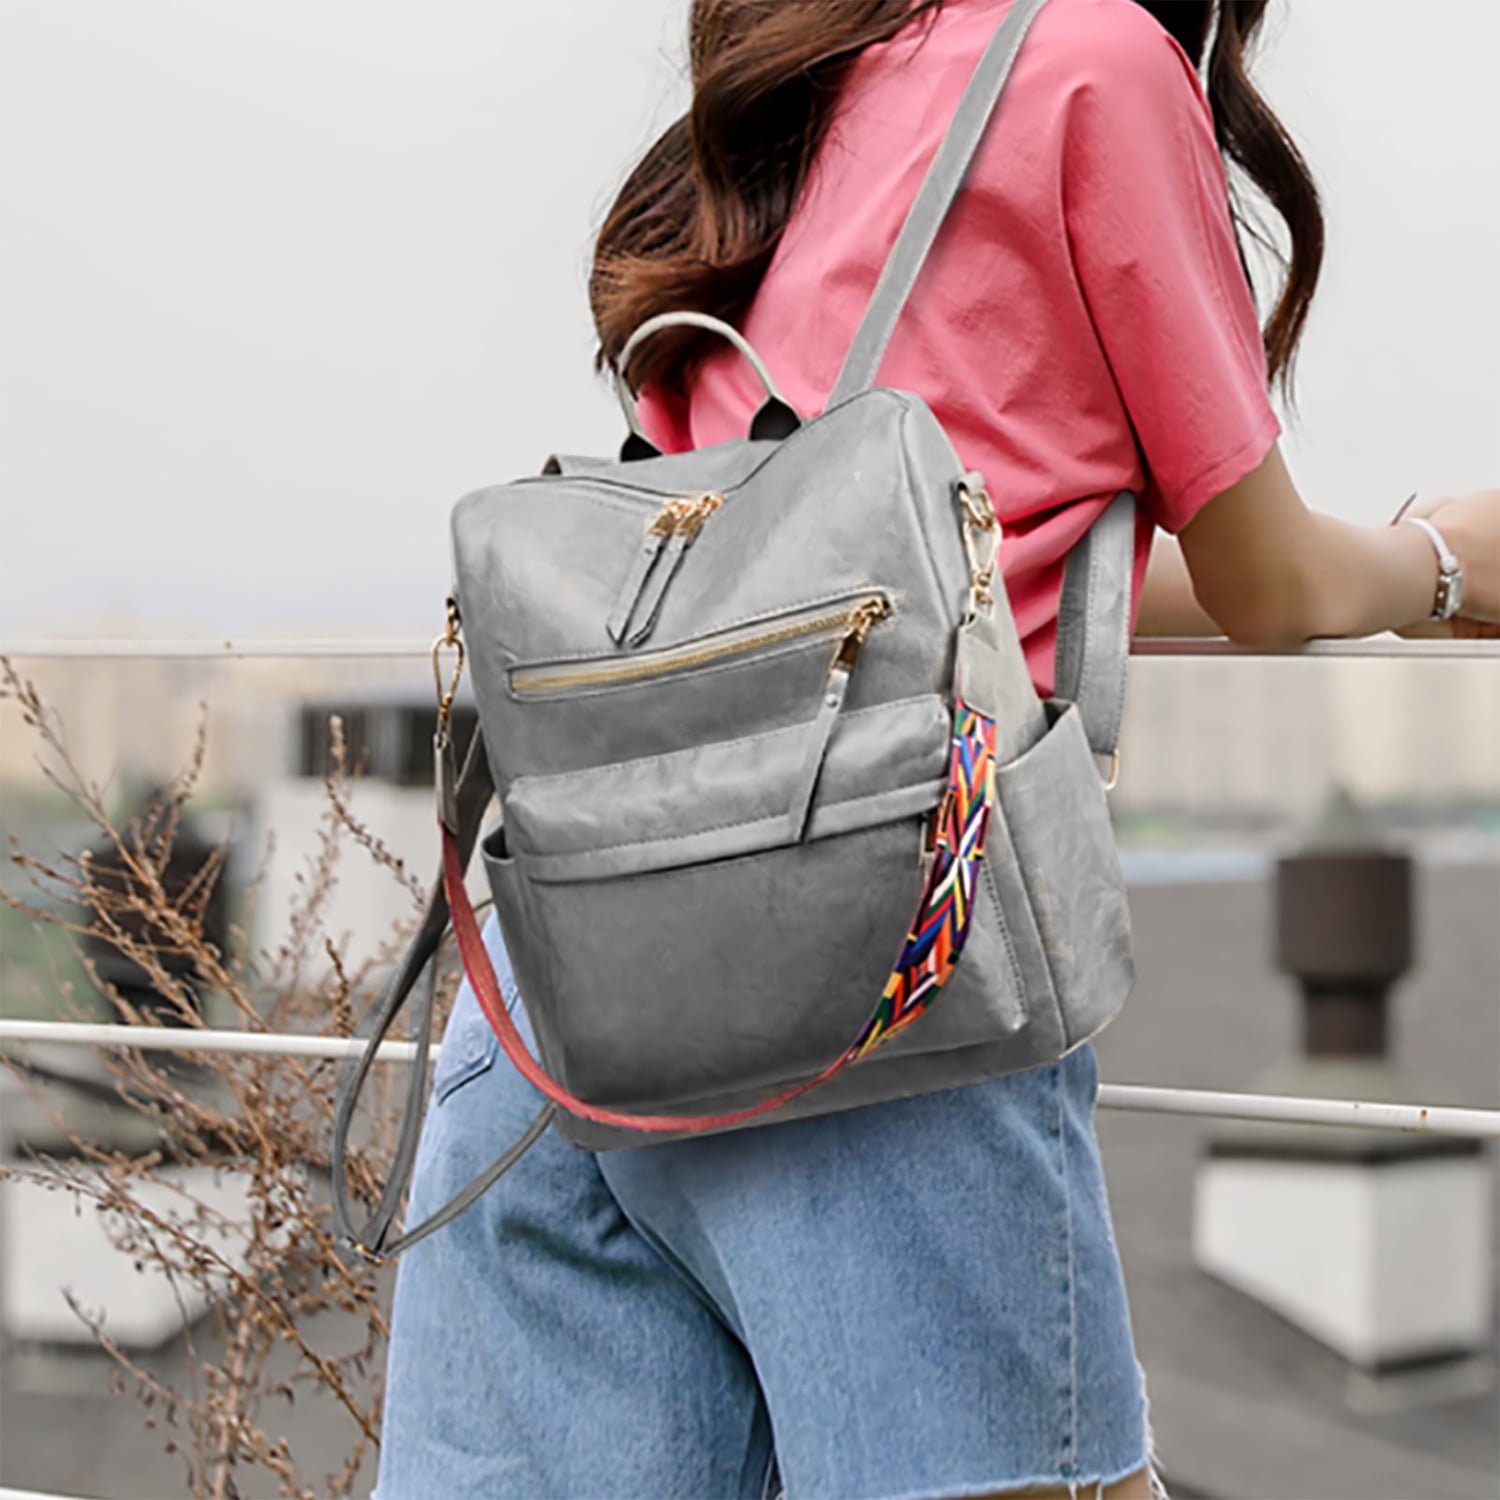 YOMYM PU Leather Women Backpack Travel Bag, Purses Multipurpose